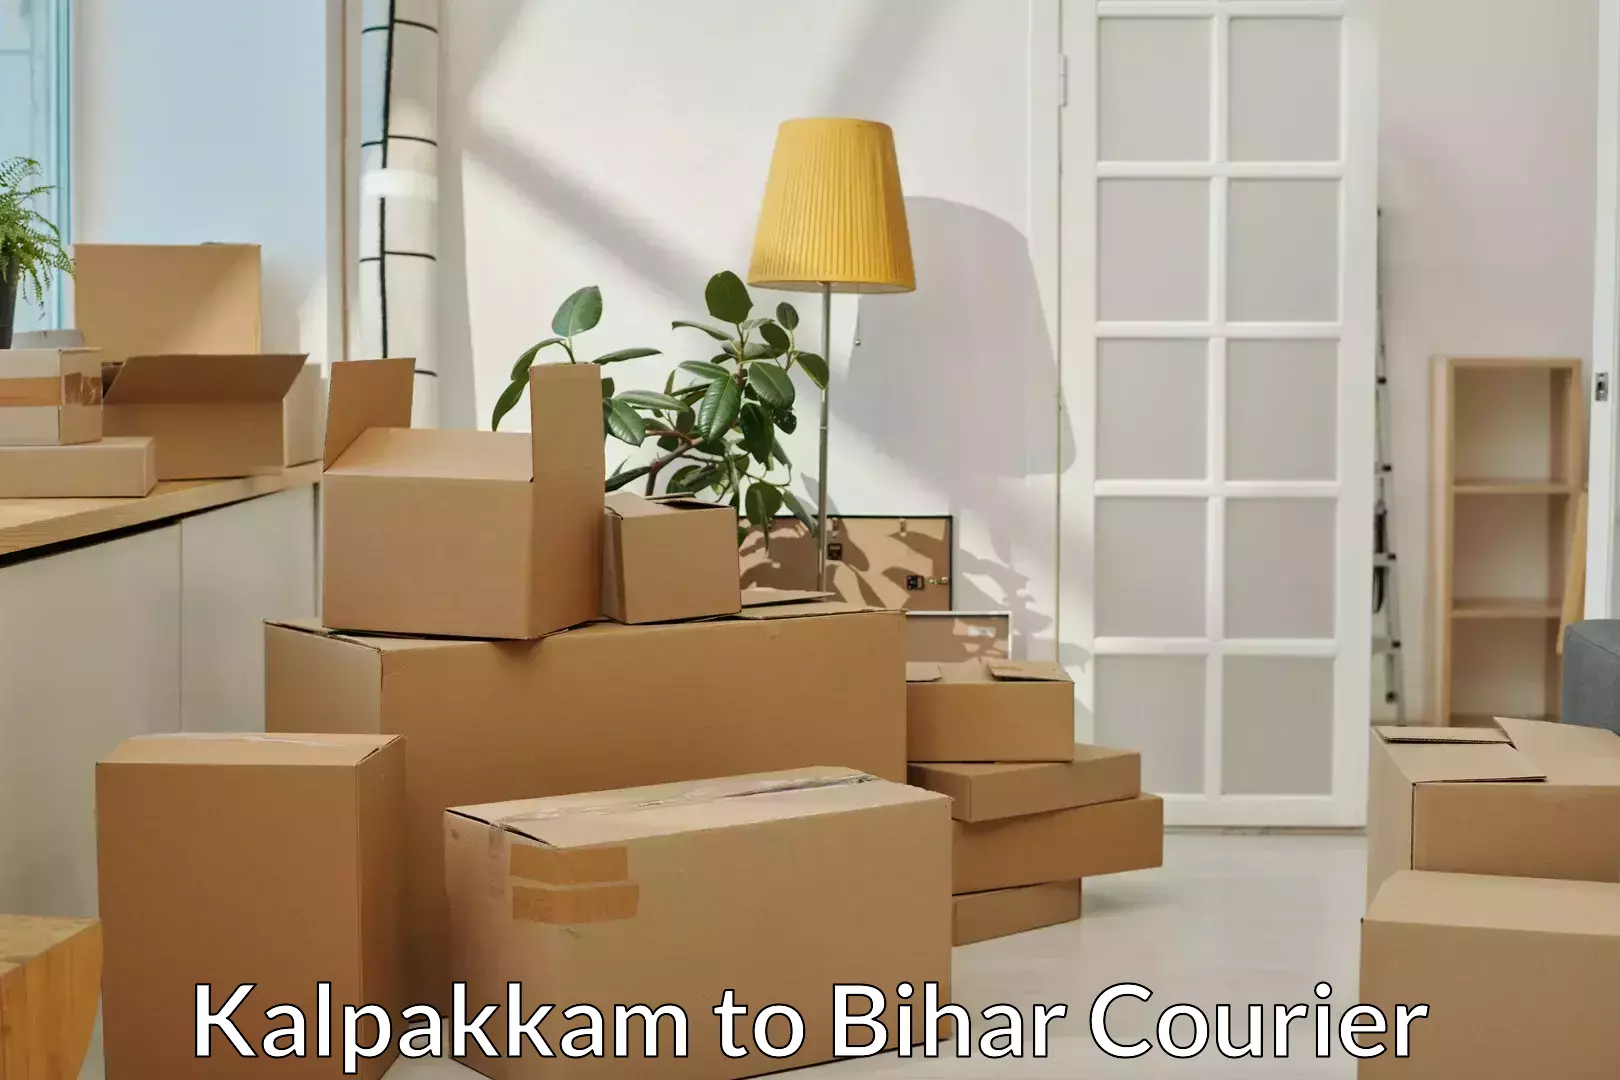 Professional moving company in Kalpakkam to Kamtaul